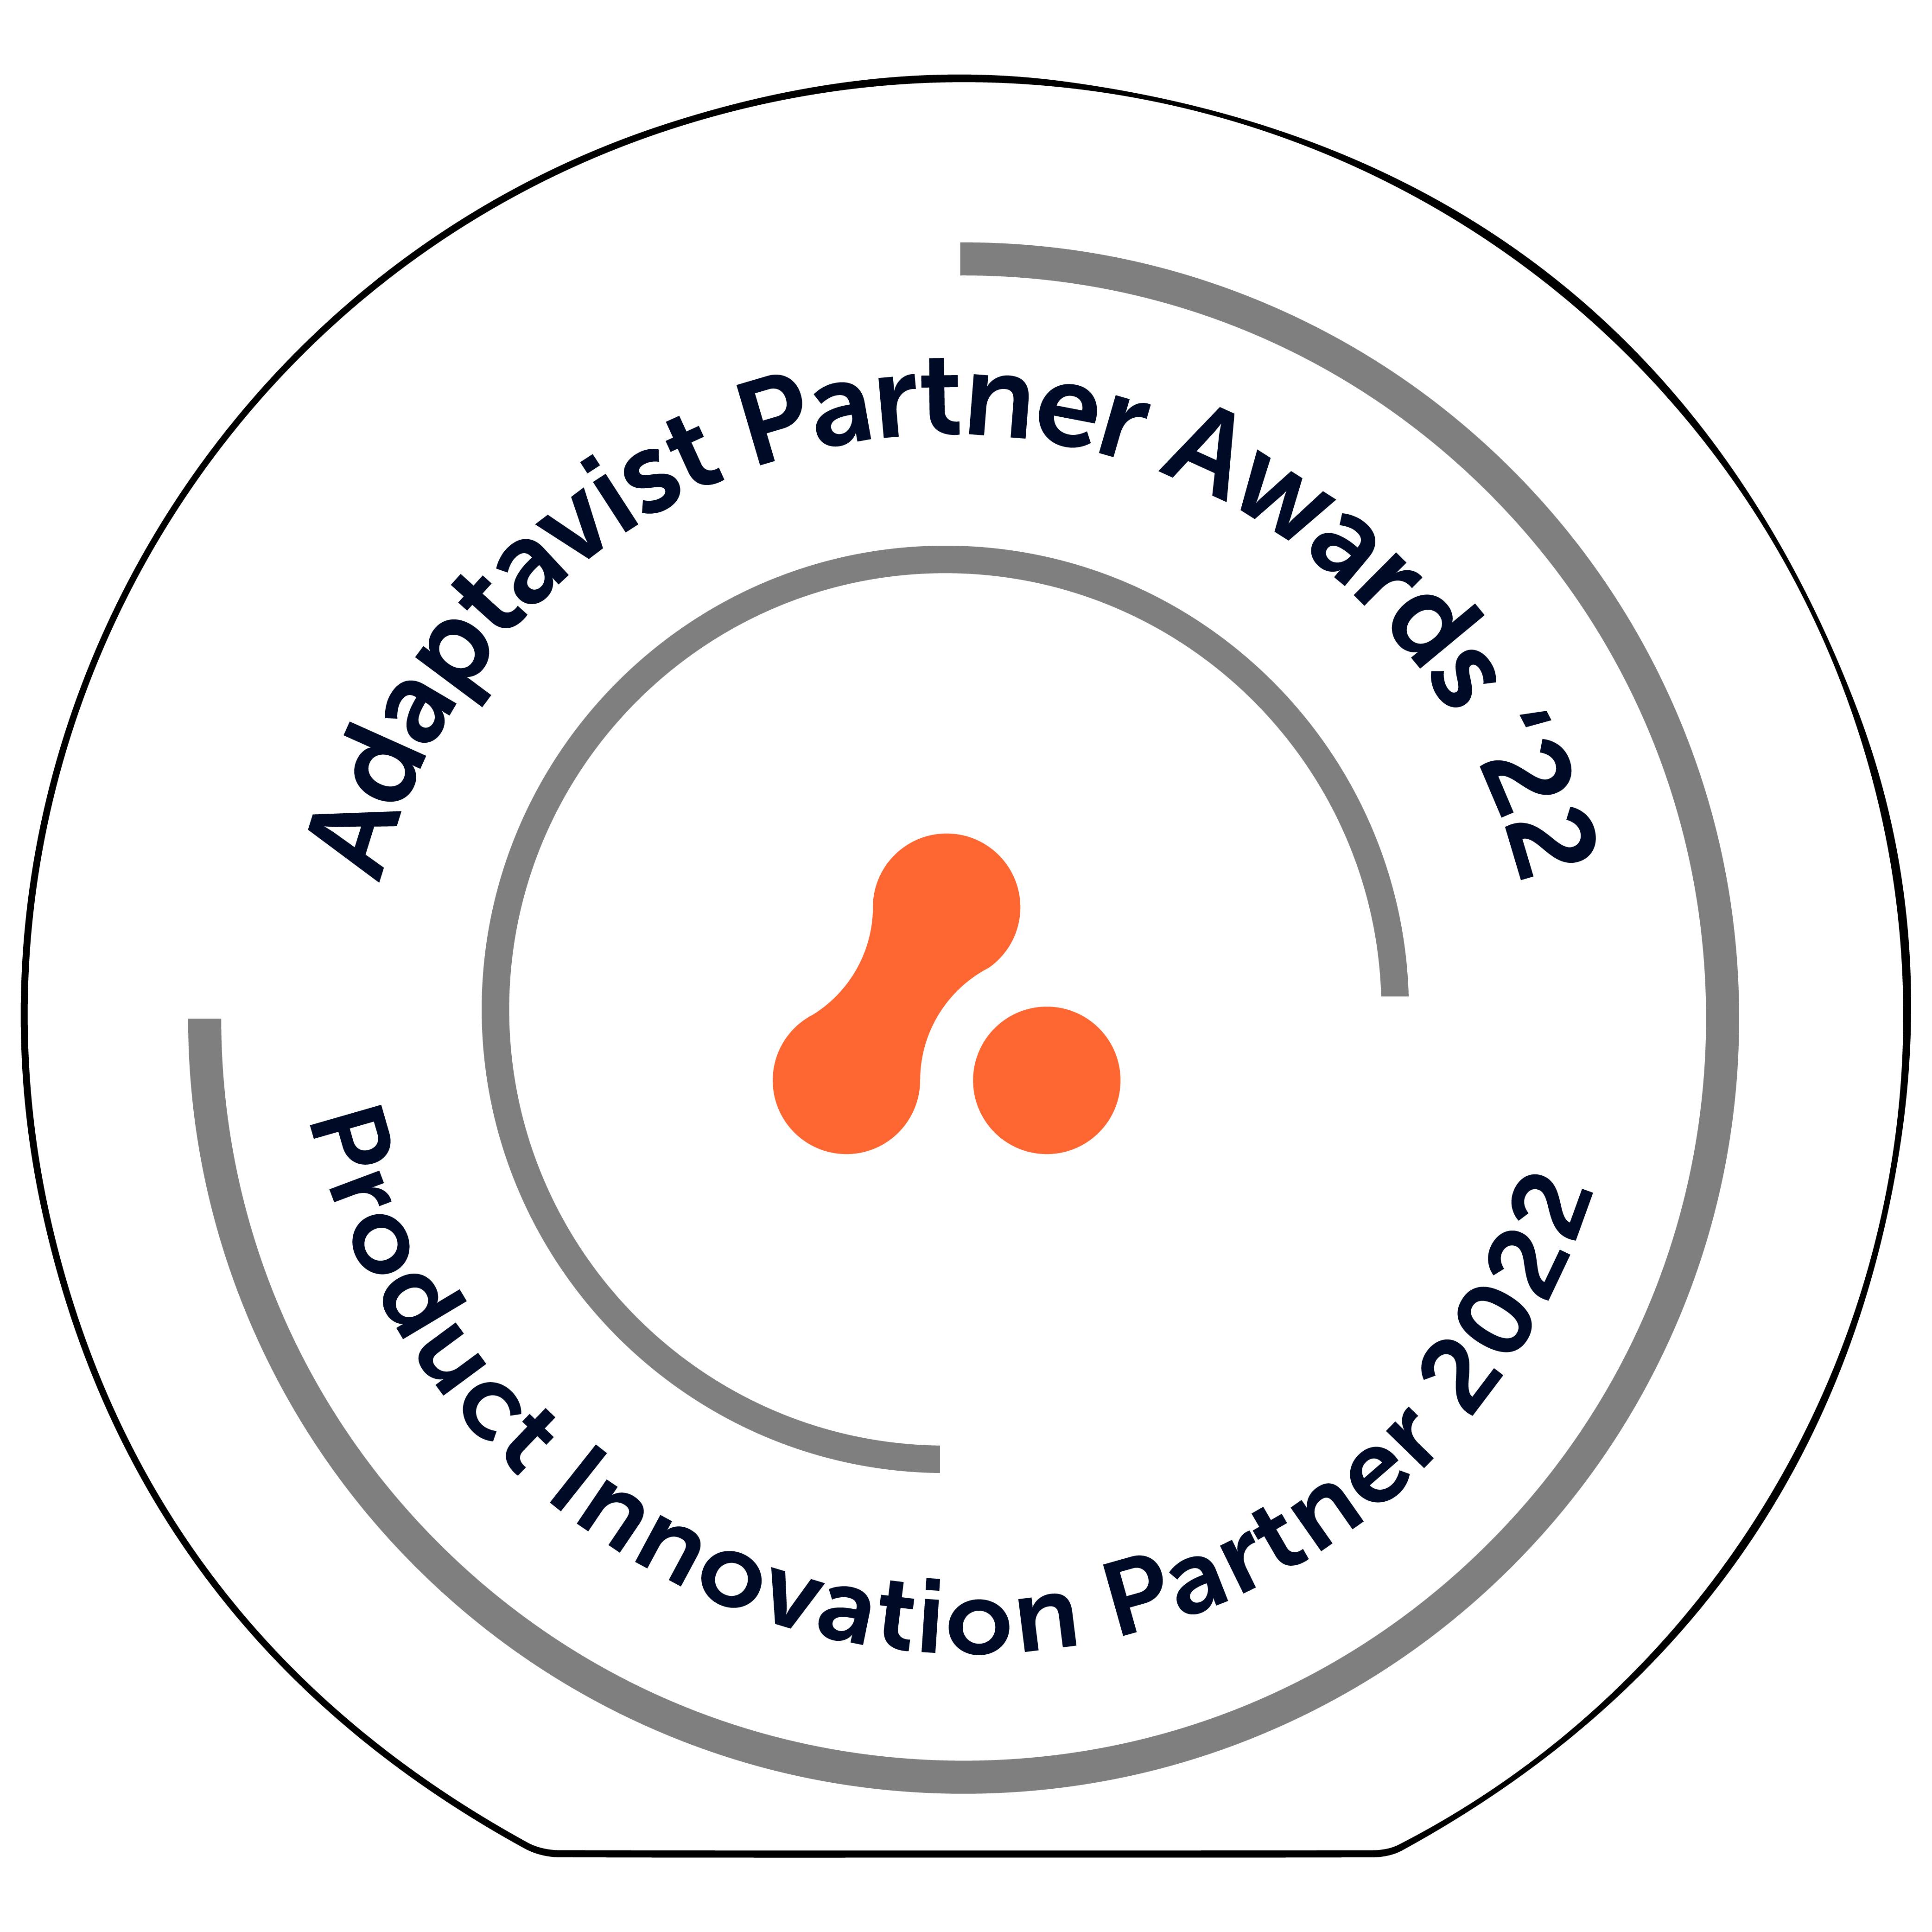 Product Innovation Partner 2022